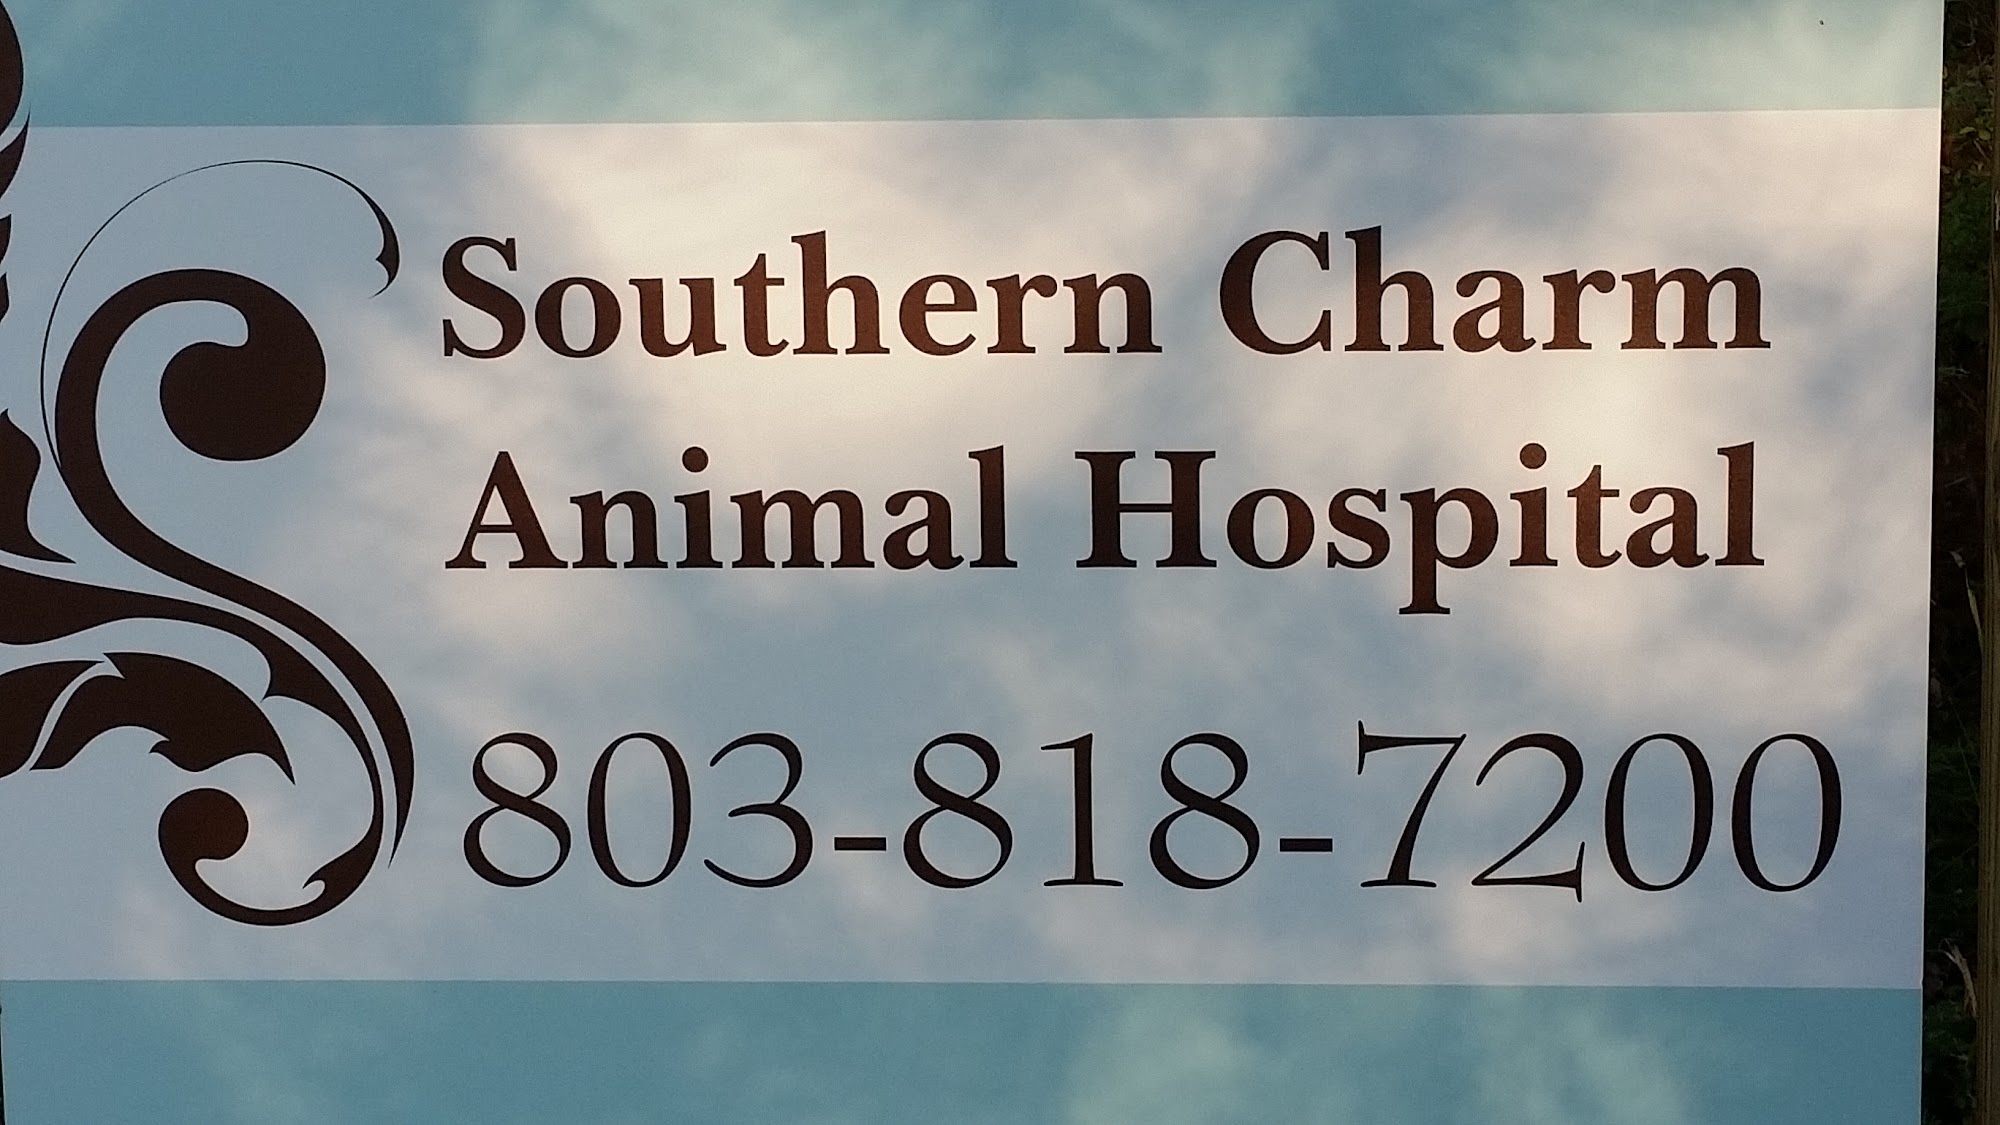 SOUTHERN CHARM ANIMAL HOSPITAL, LLC